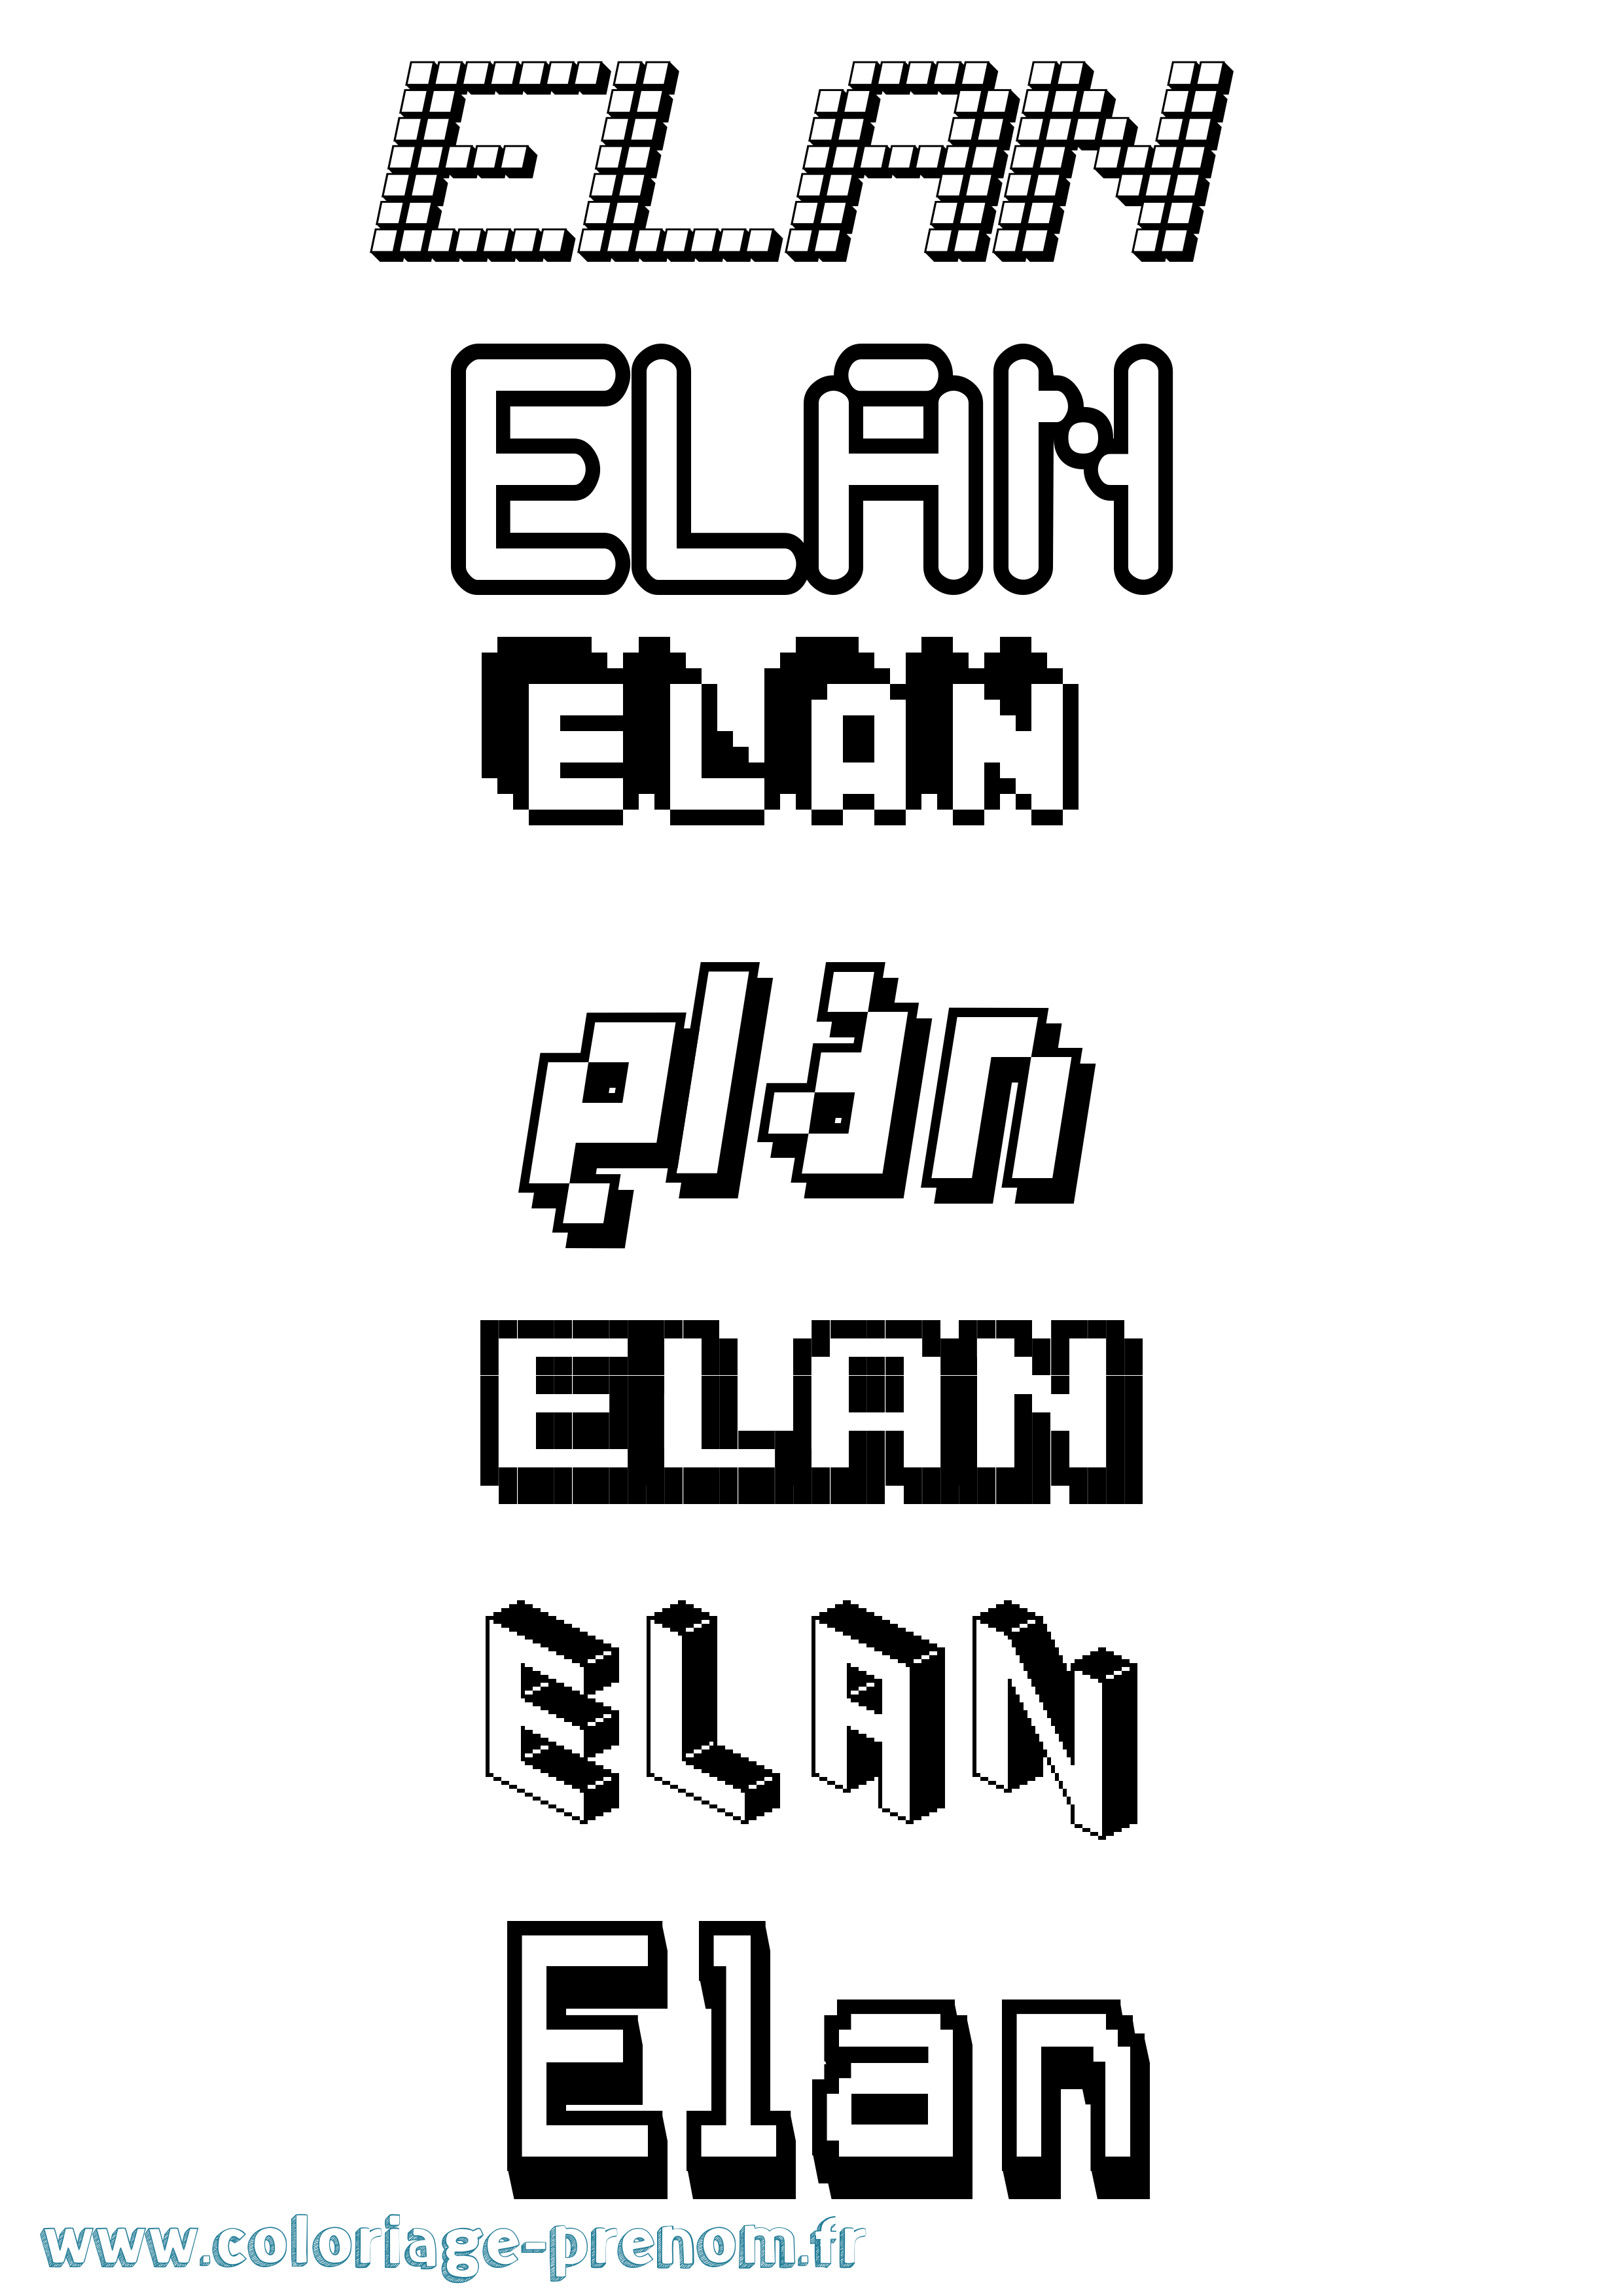 Coloriage prénom Elan Pixel